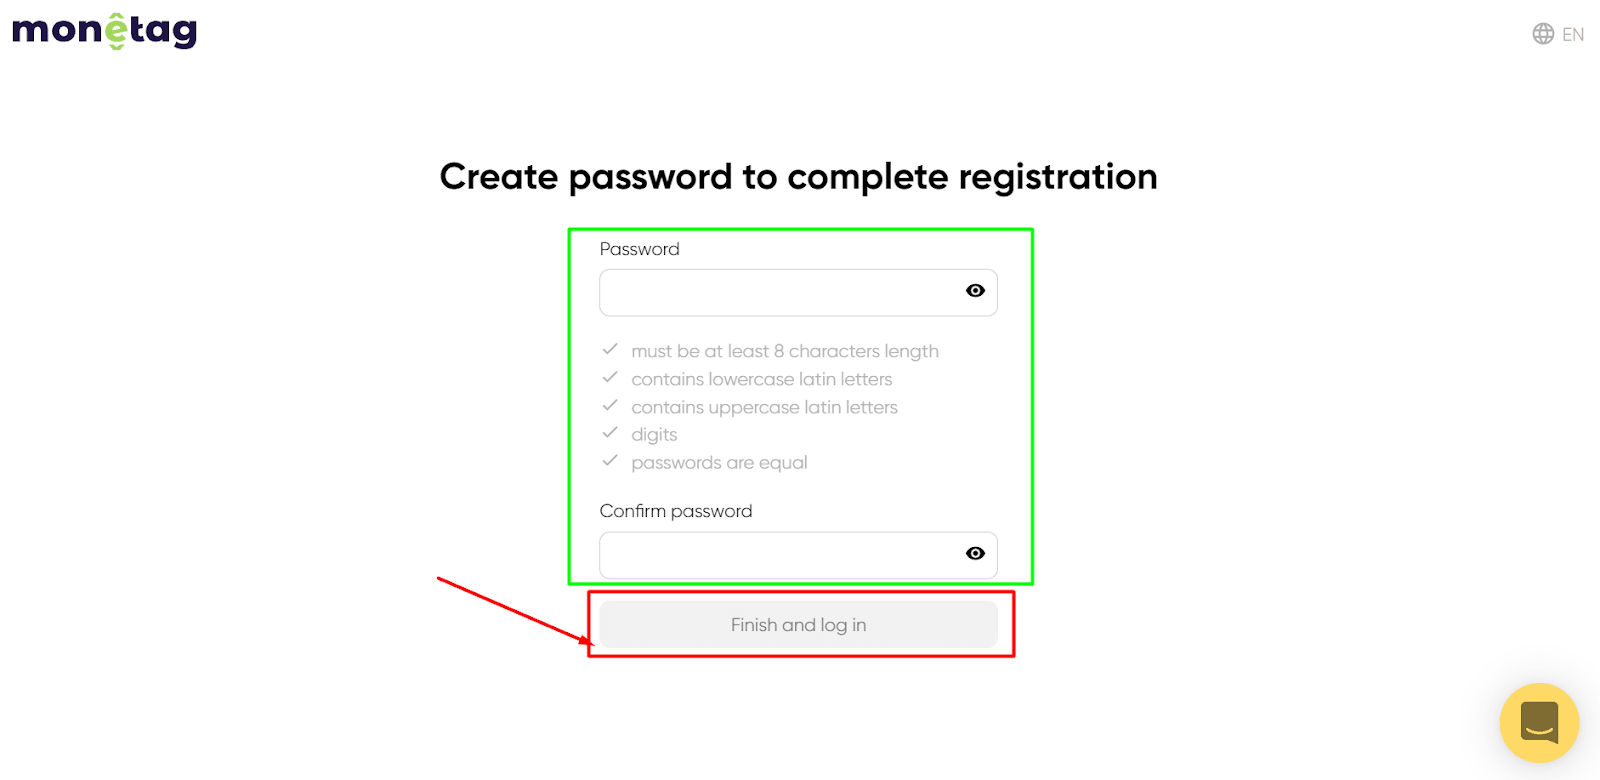 Monetag-Create-Password-for-Registration